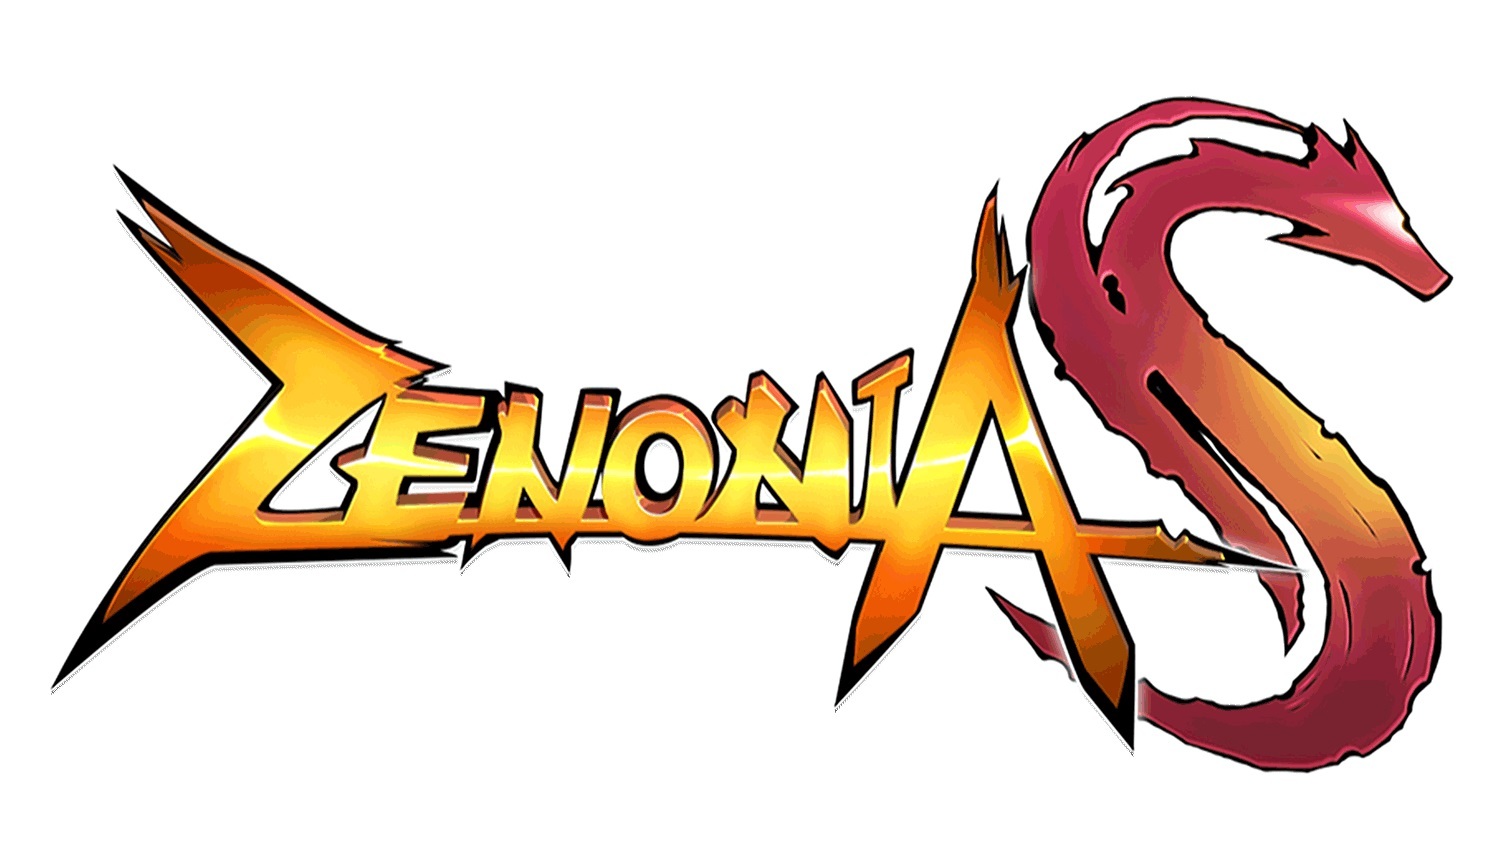 Zenonia Returns in ‘Zenonia S’ Closed Beta This Week